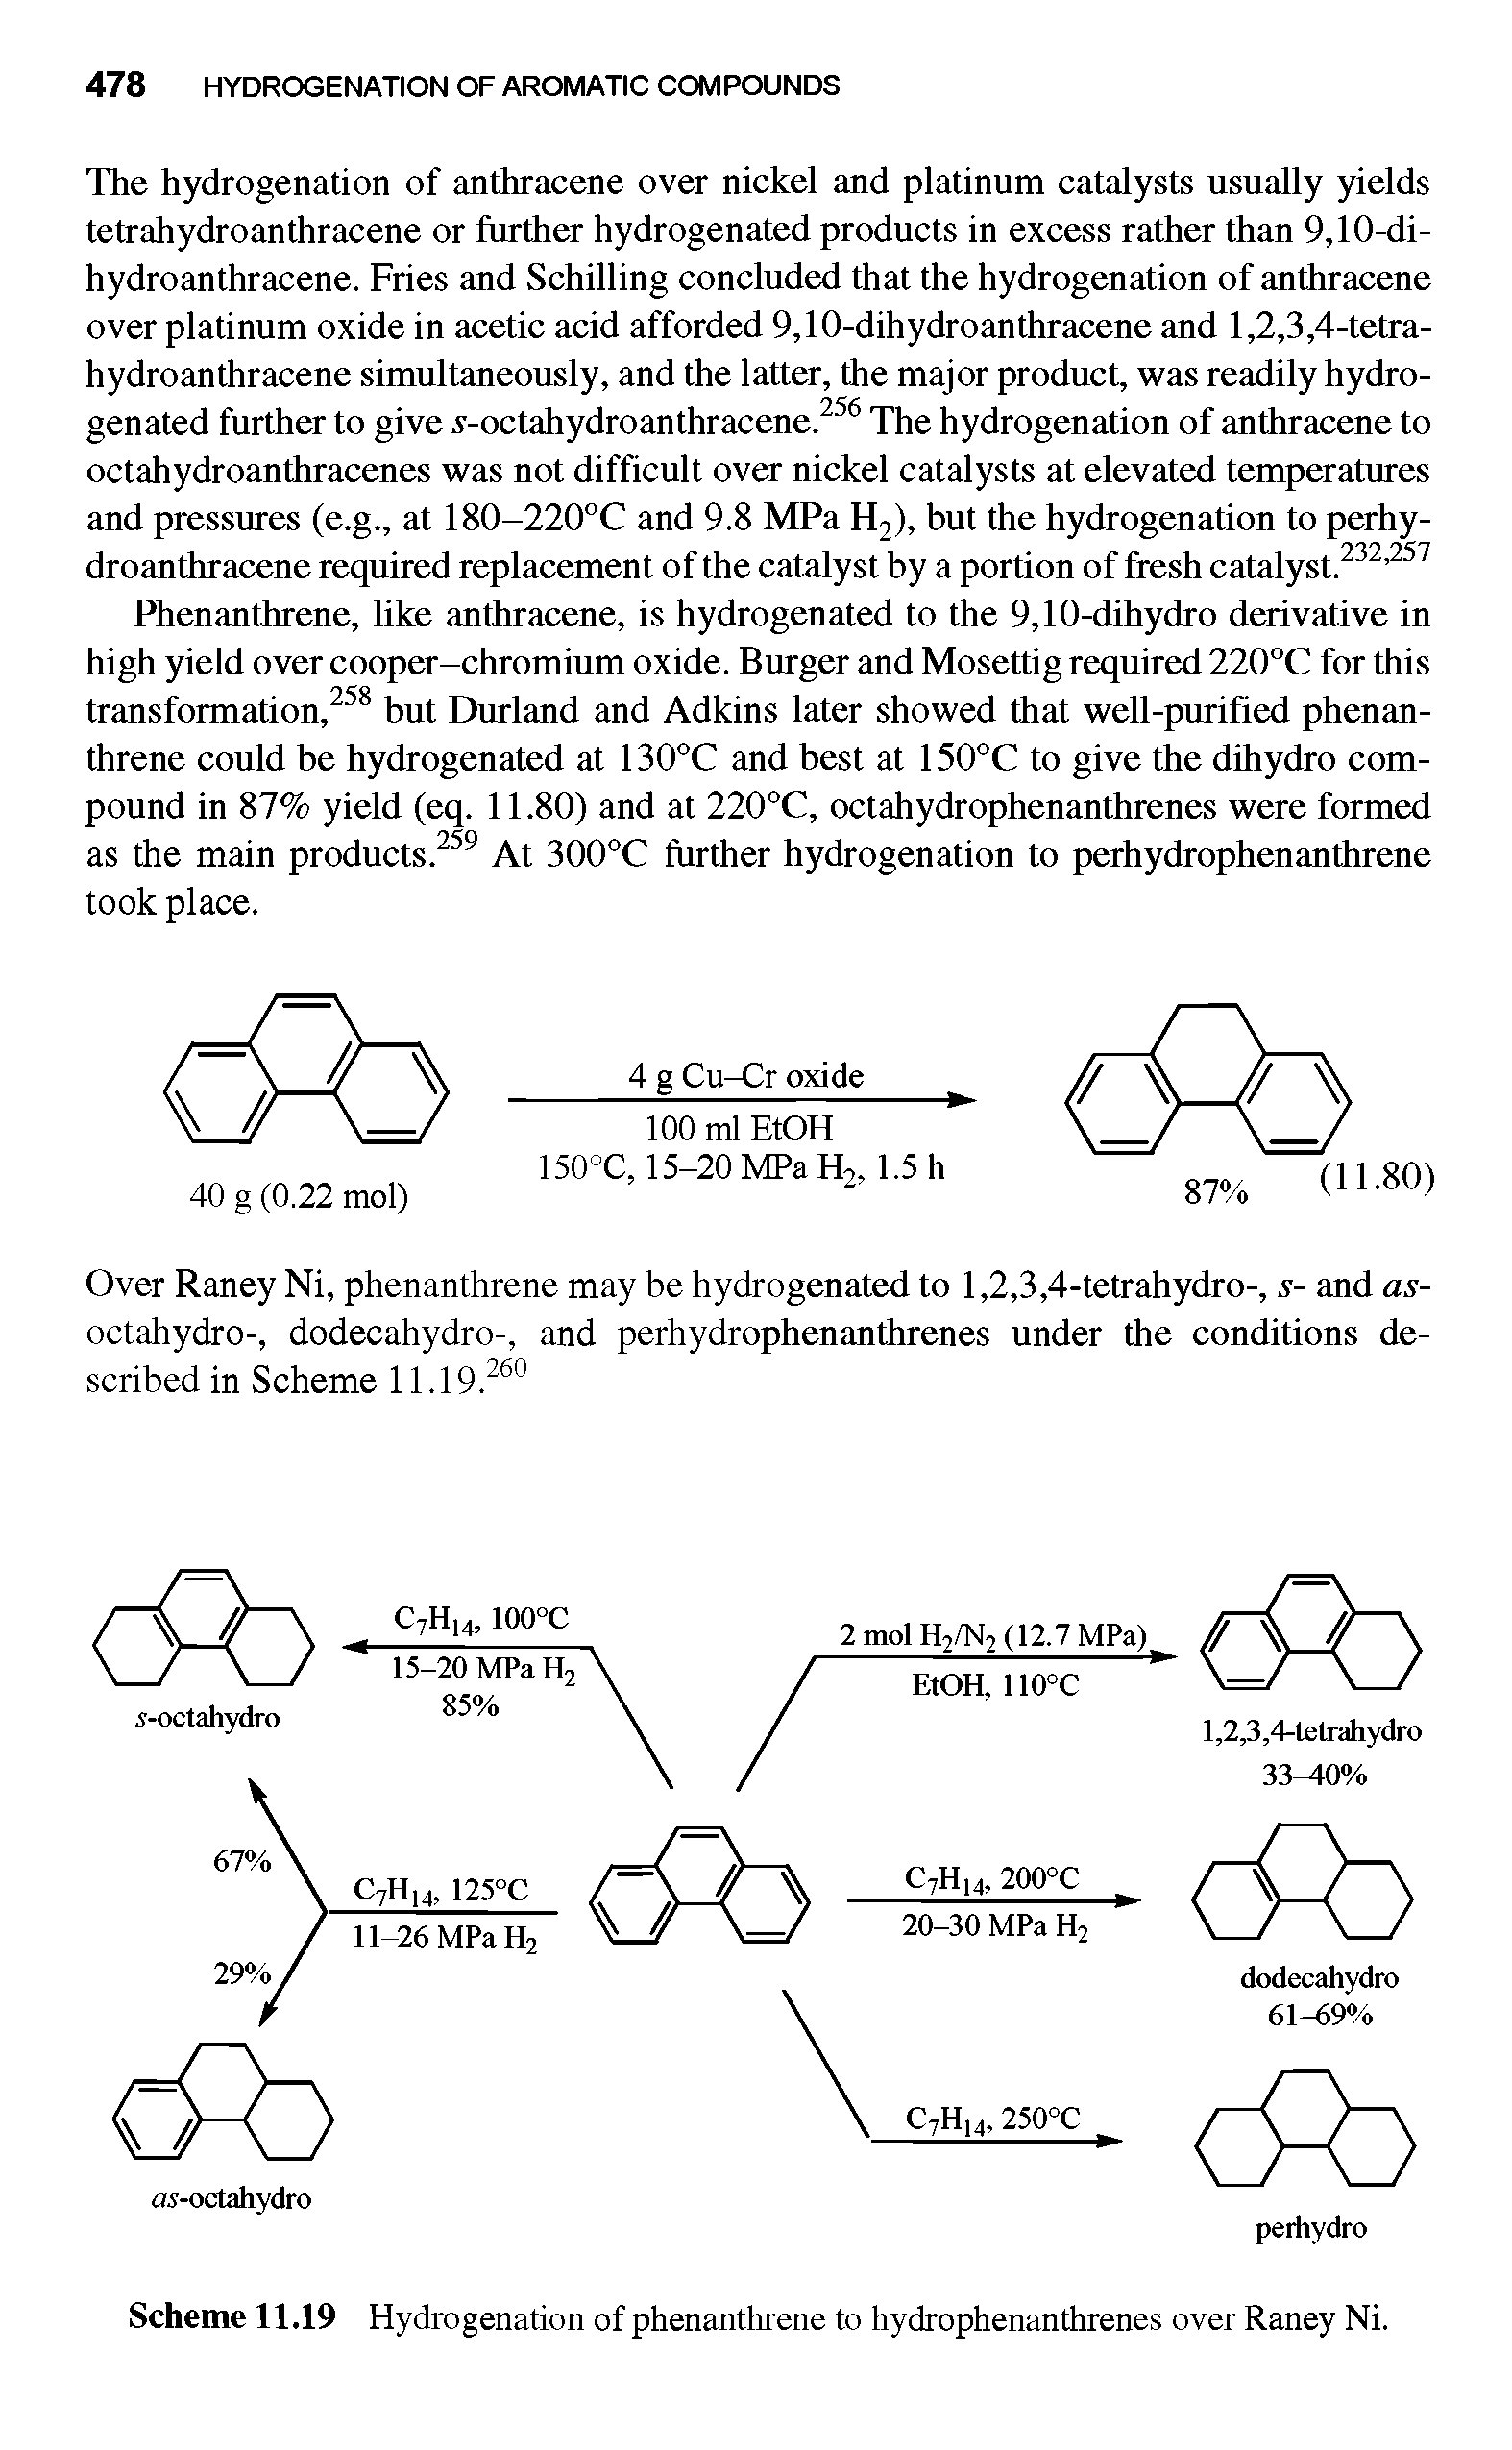 Scheme 11.19 Hydrogenation of phenanthrene to hydrophenanthrenes over Raney Ni.